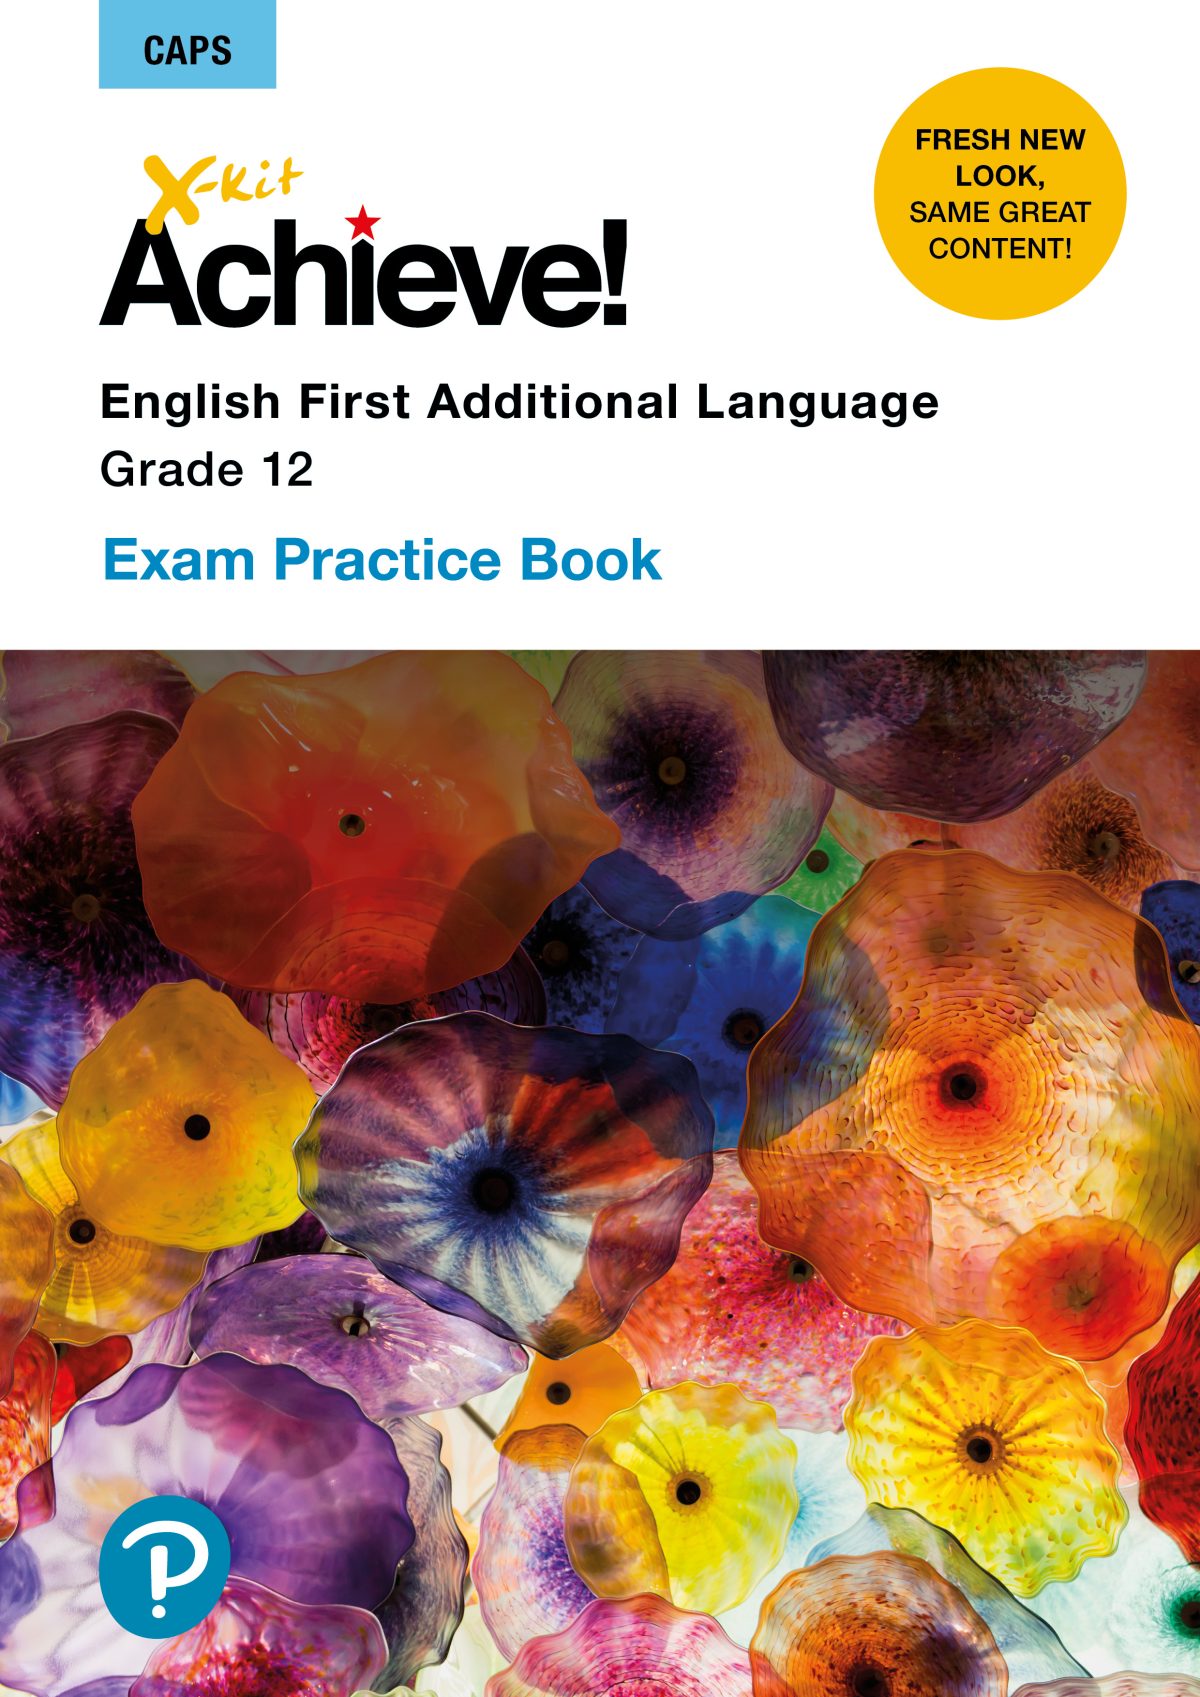 X-Kit Achieve! English First Additional Language Grade 12 - Exam Practice Book